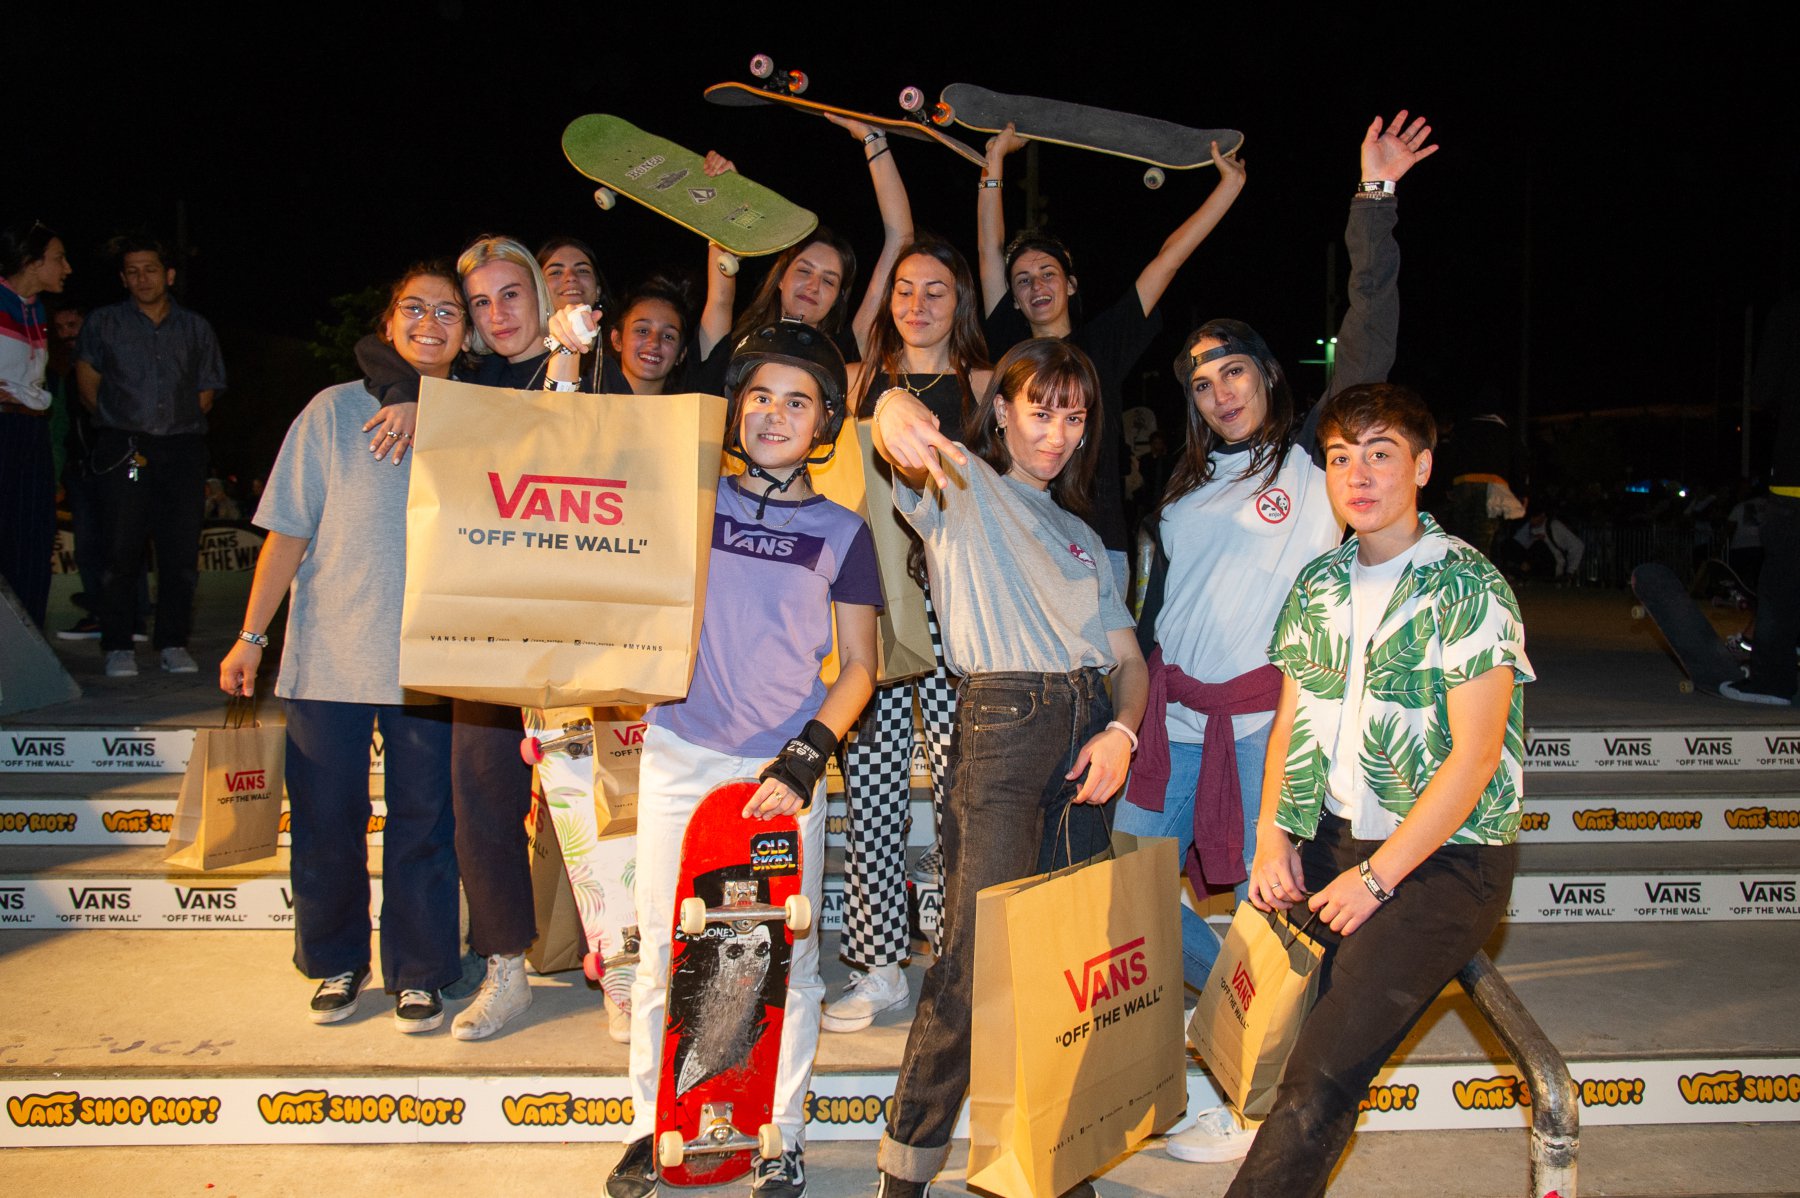 Vans Shop Riot: Το μεγαλύτερο Skate Contest επιστρέφει στις 10 Σεπτεμβρίου